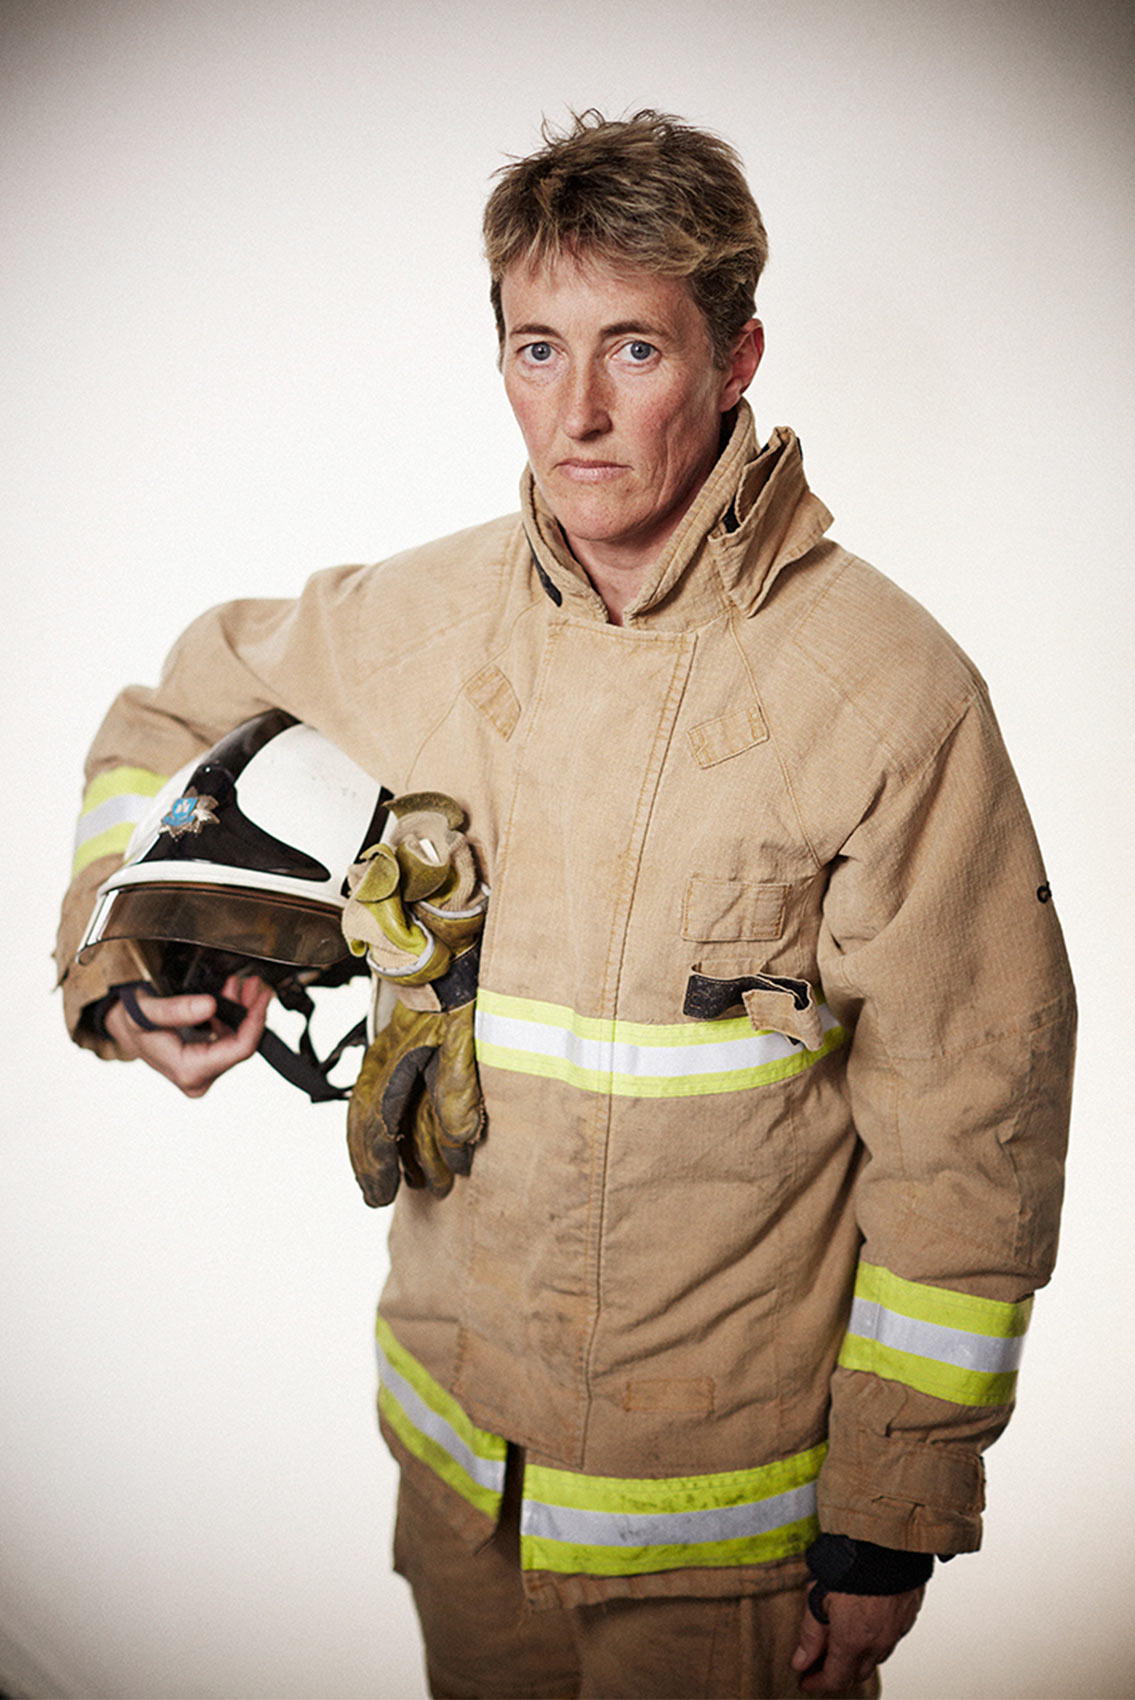 Fire Brigade portrait